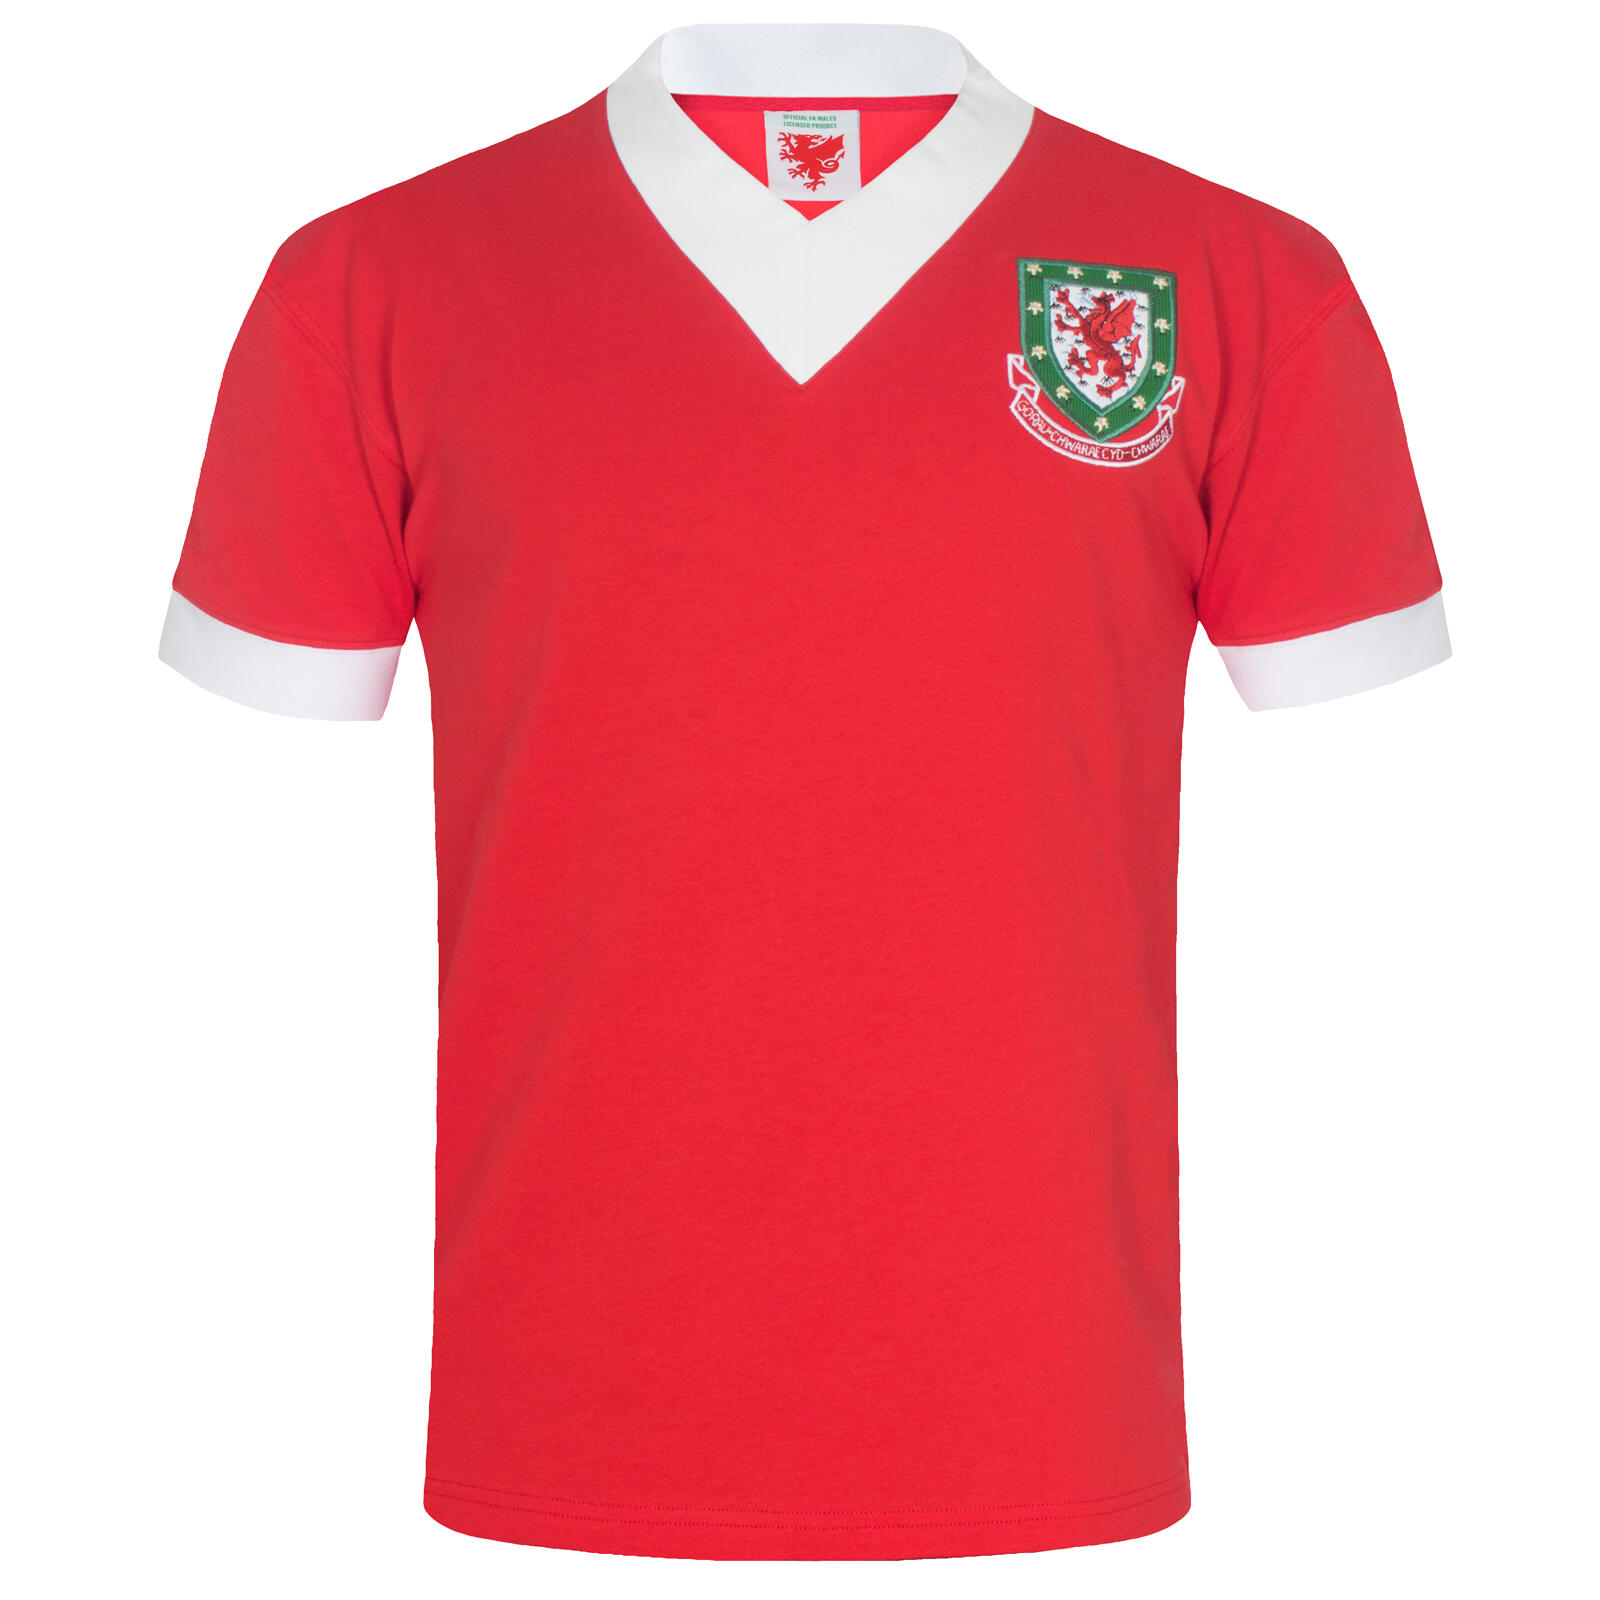 FA WALES Wales Cymru FAW Official Gift Mens Retro 1958/1976/1984 Football Kit Shirt Red